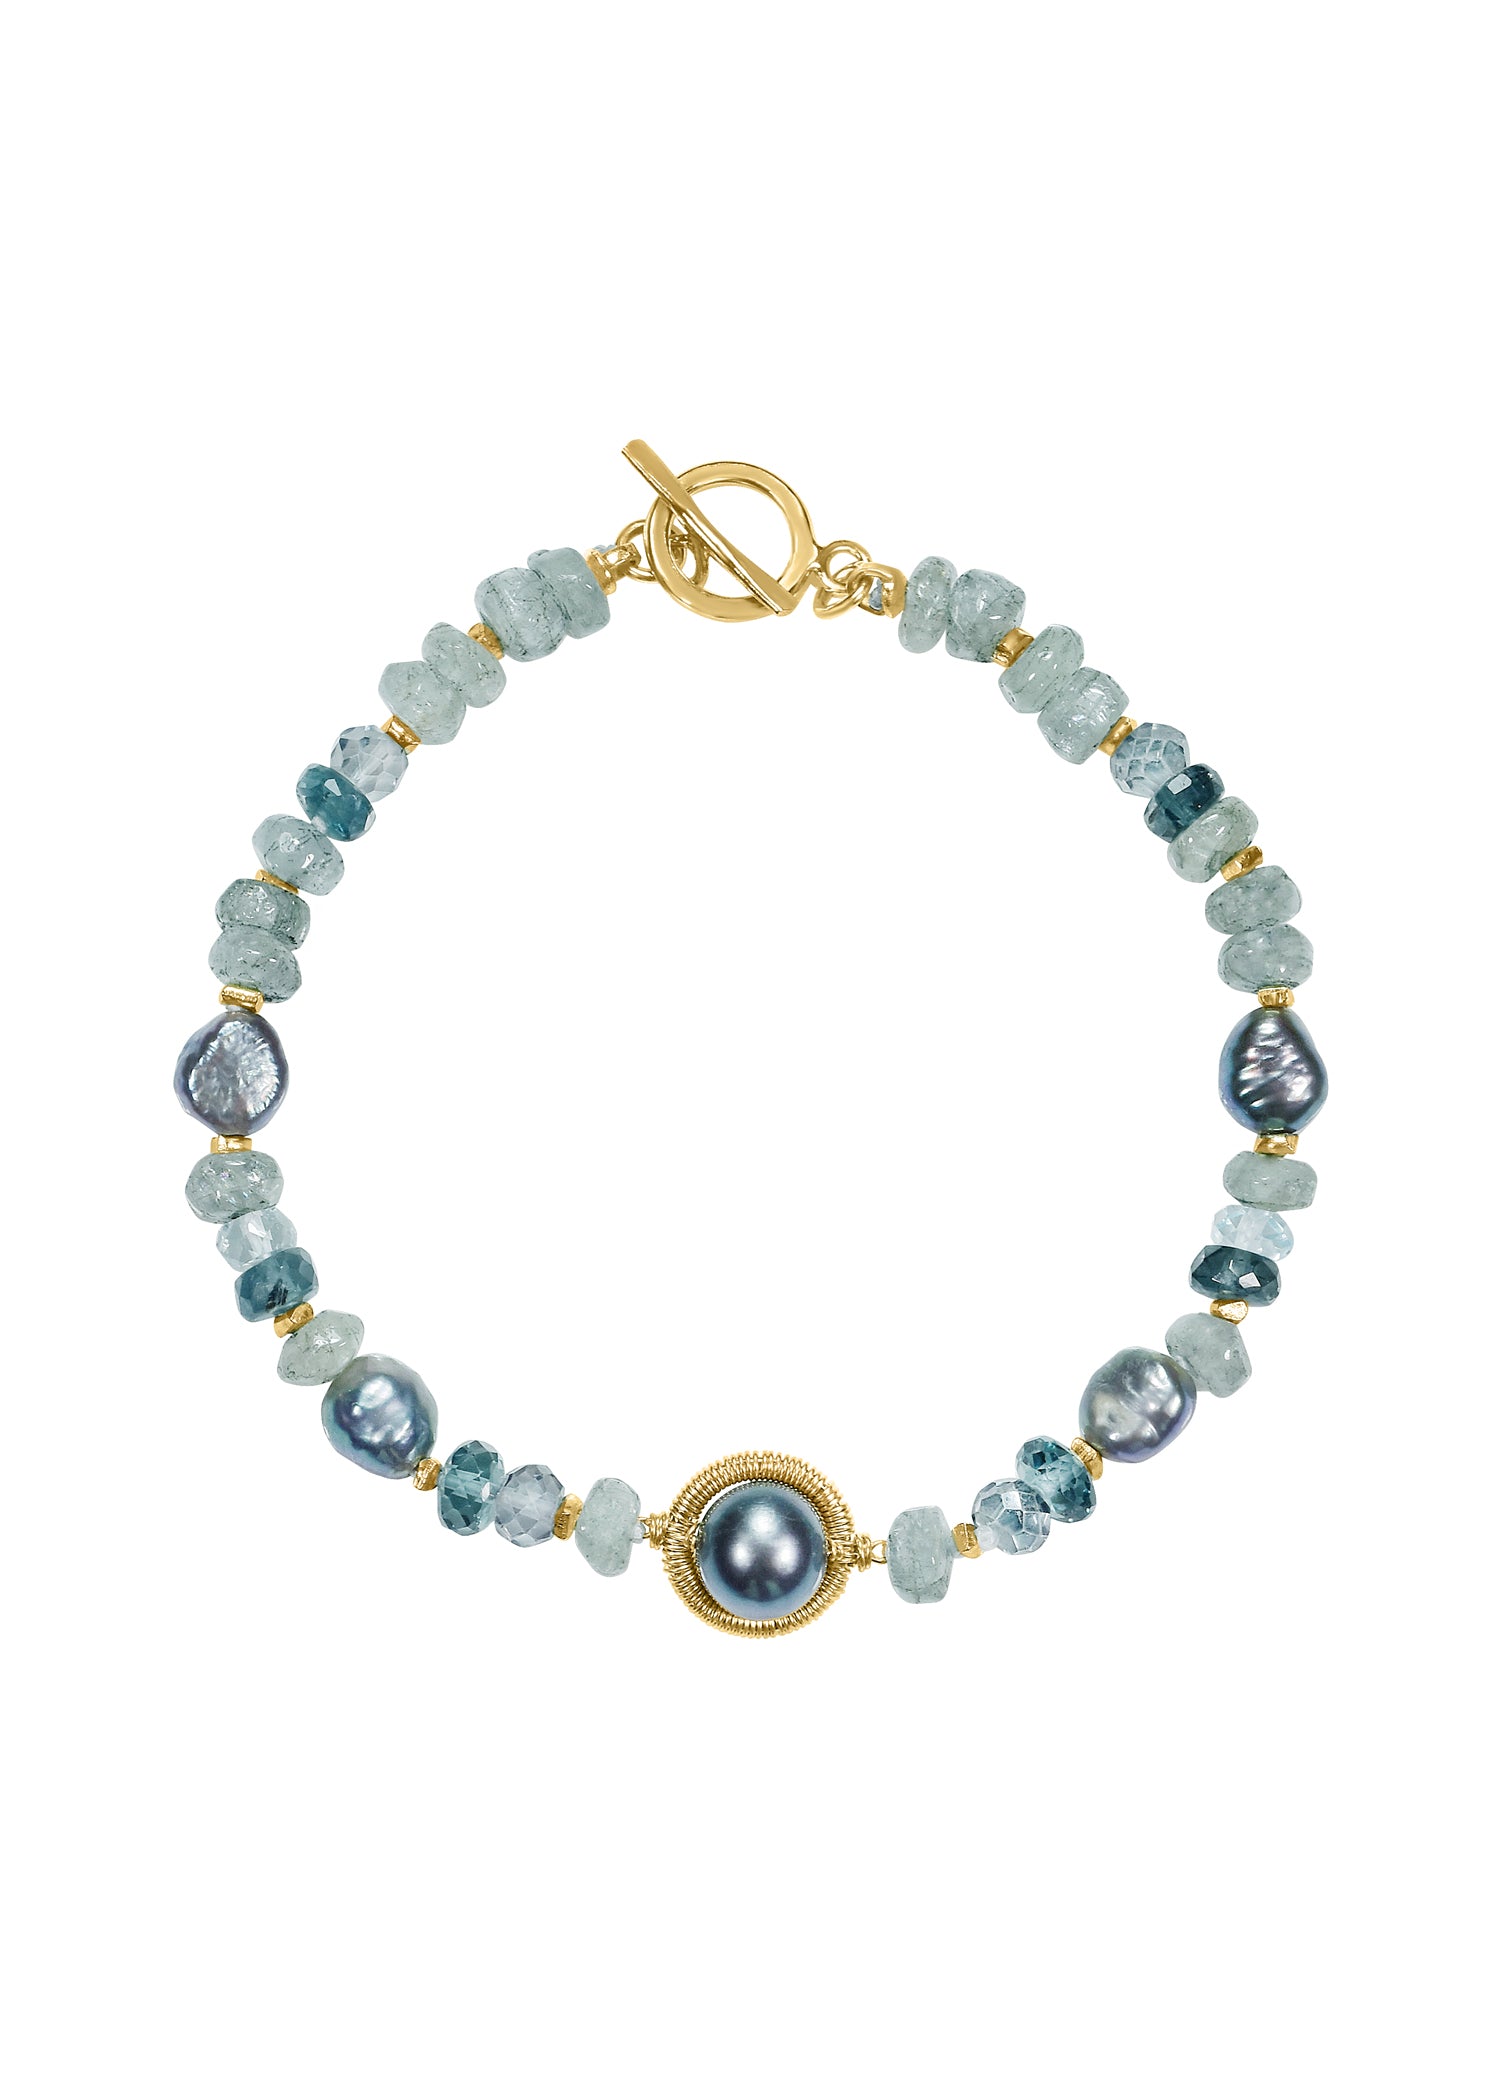 Freshwater pearl Aquamarine Kyanite Blue quartz 14k gold fill Pendant measures 3/8" in diameter.  Total length is 7" Handmade in our Los Angeles studio